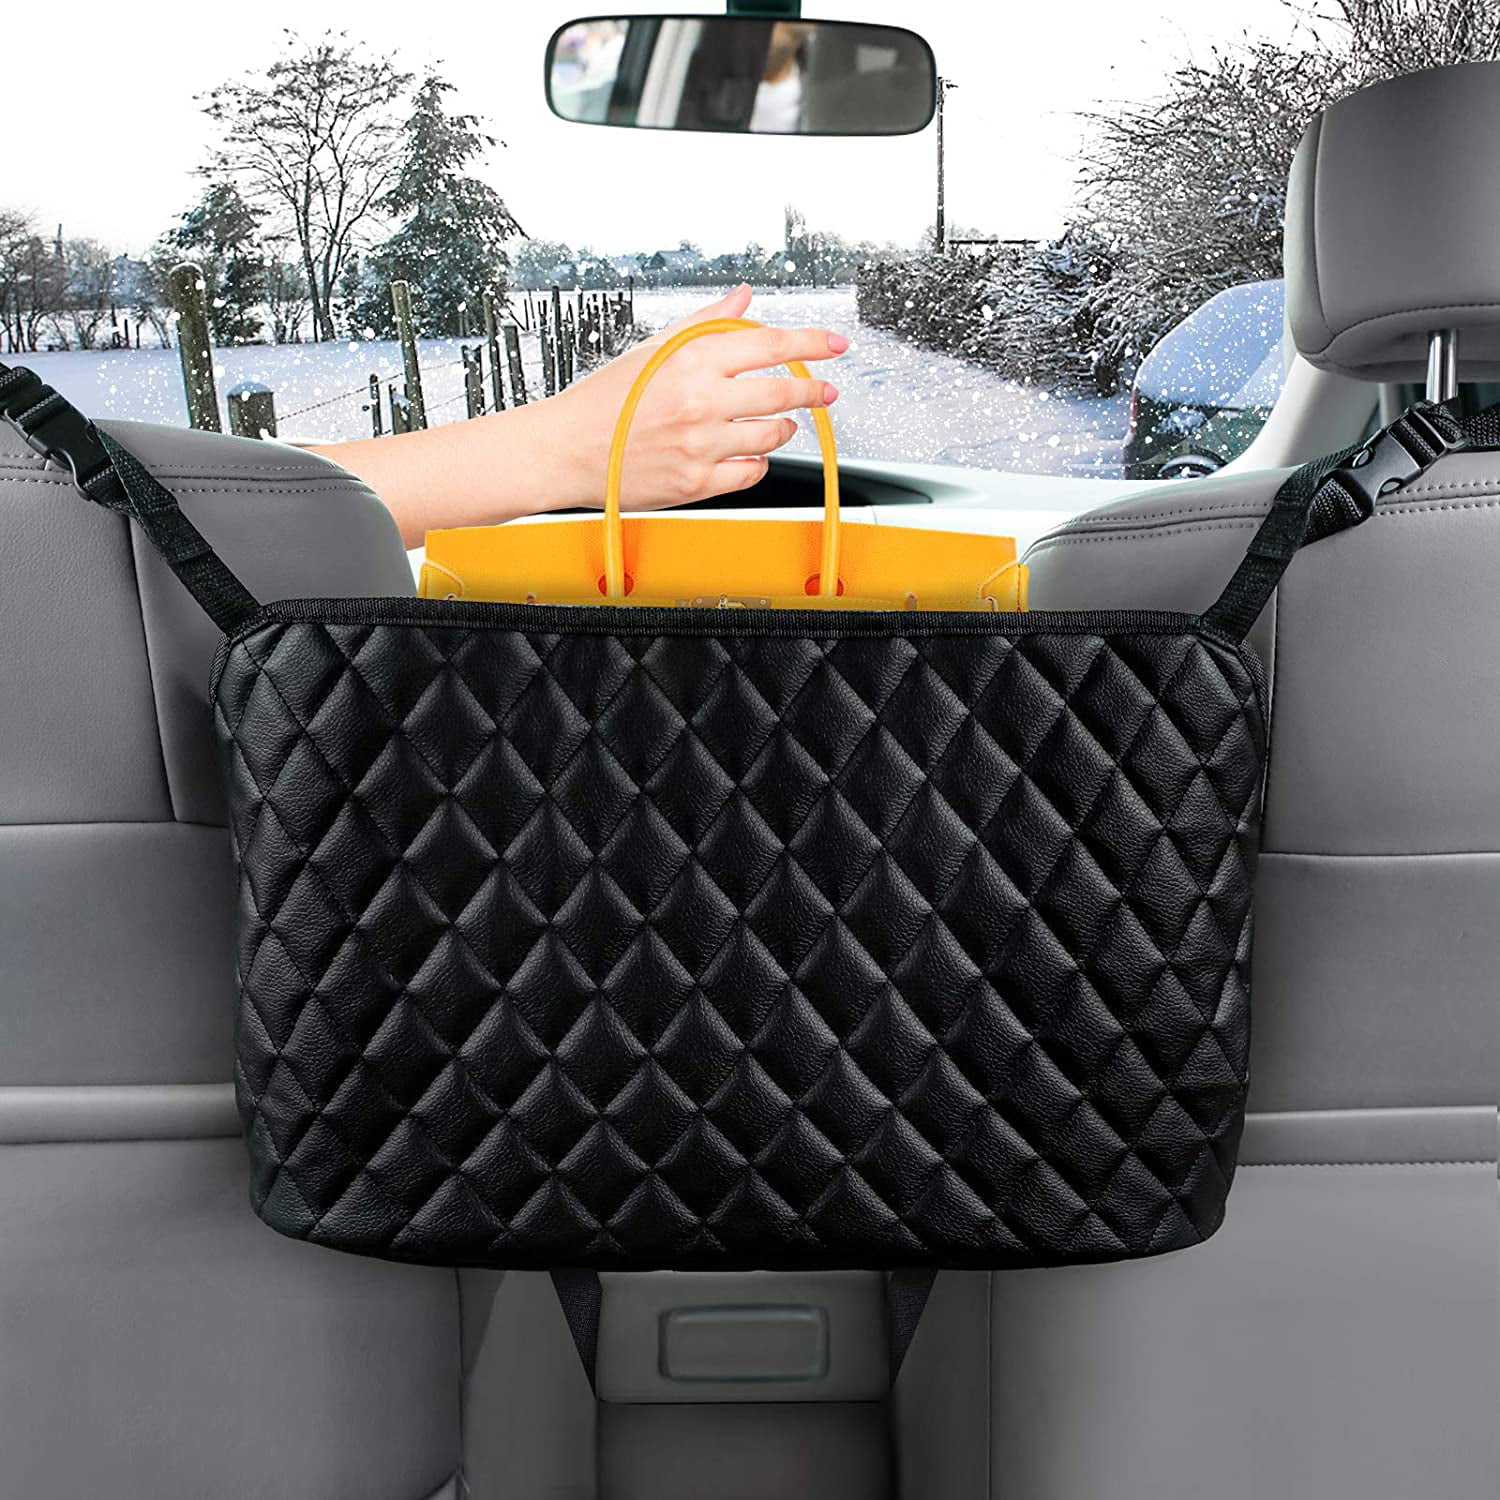 YeahLoop Handbag Holder,Car Handbag Holder for Seat Storage and Handbag Holding Hanging Storage Bag Between Car Seats,Car Seat Storage Car Purse Organizer Front Seat 